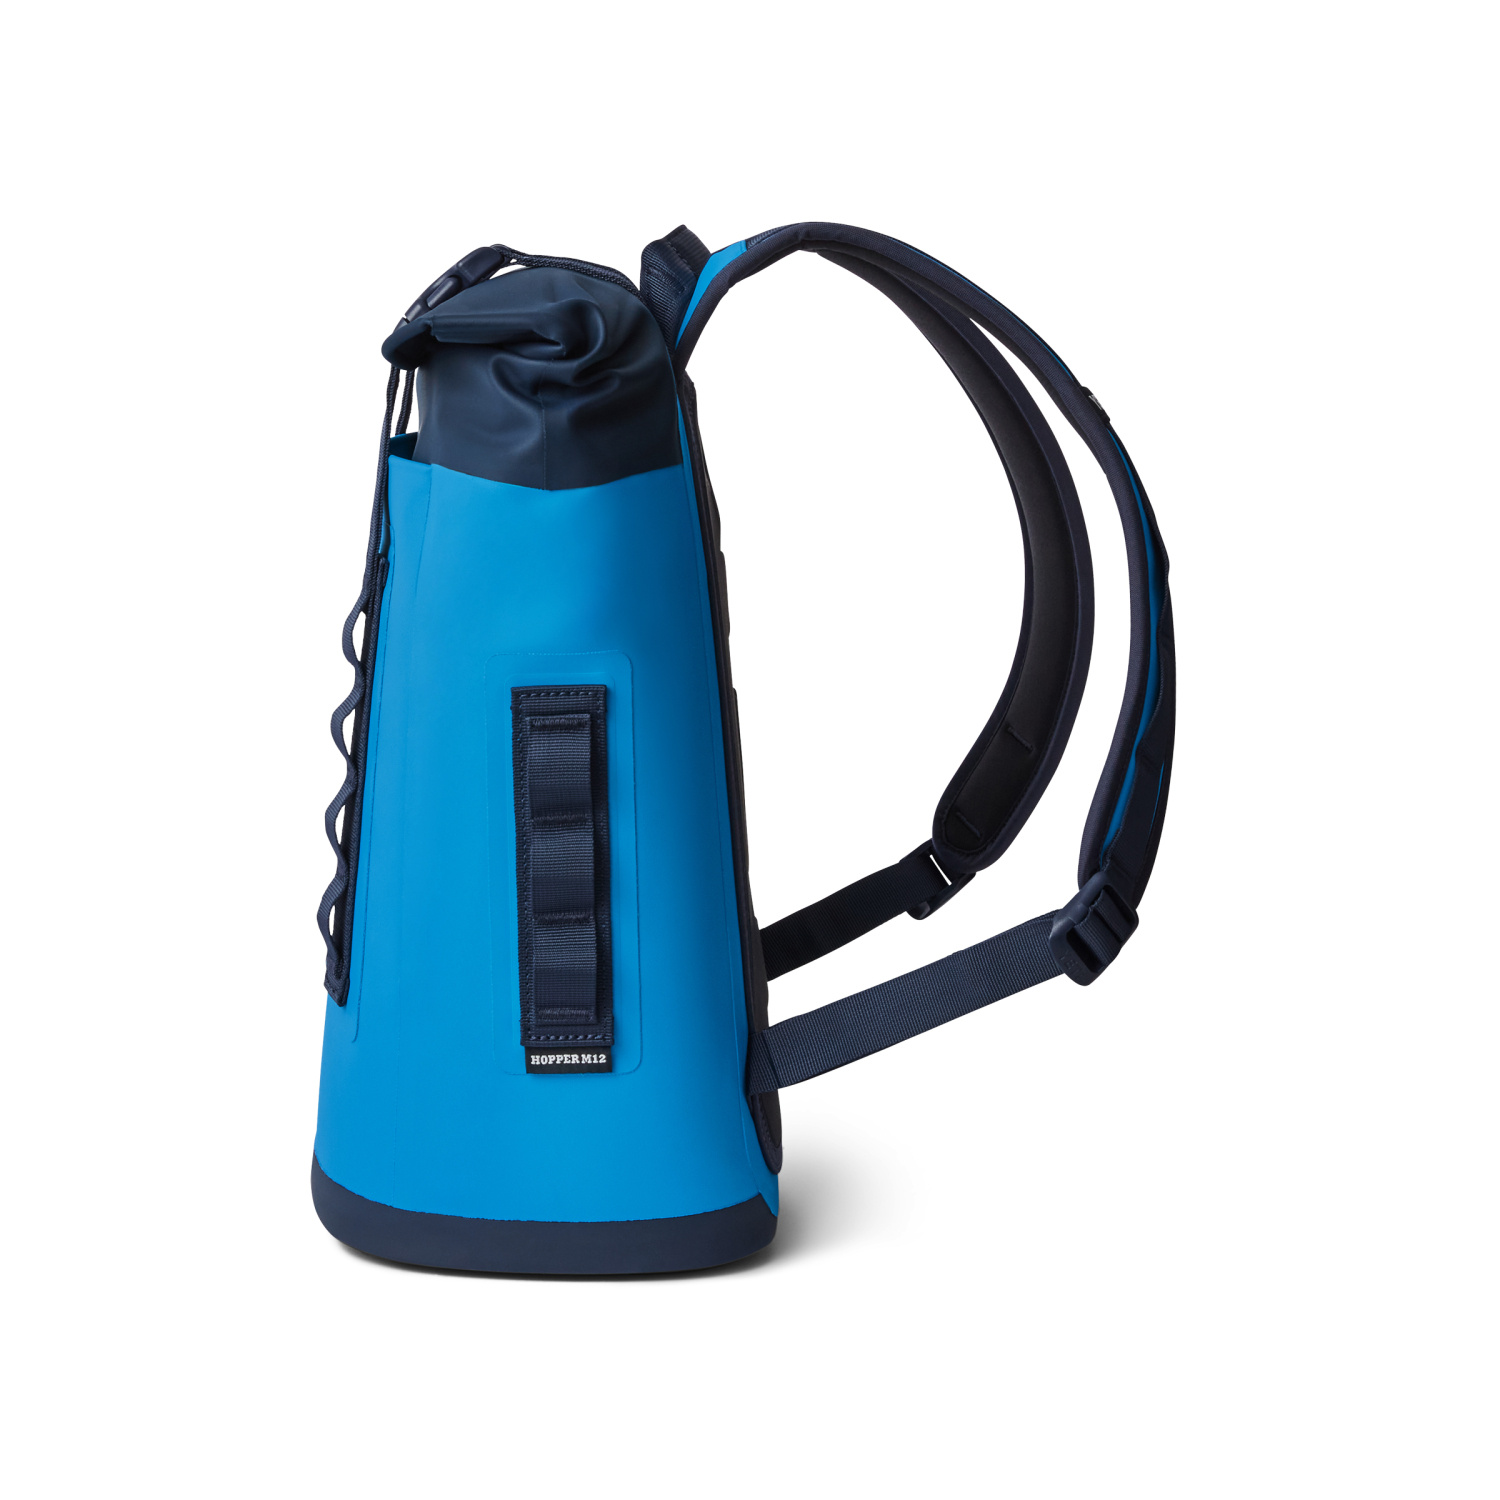 Yeti EU Hopper Backpack M12 - Big Wave Blue